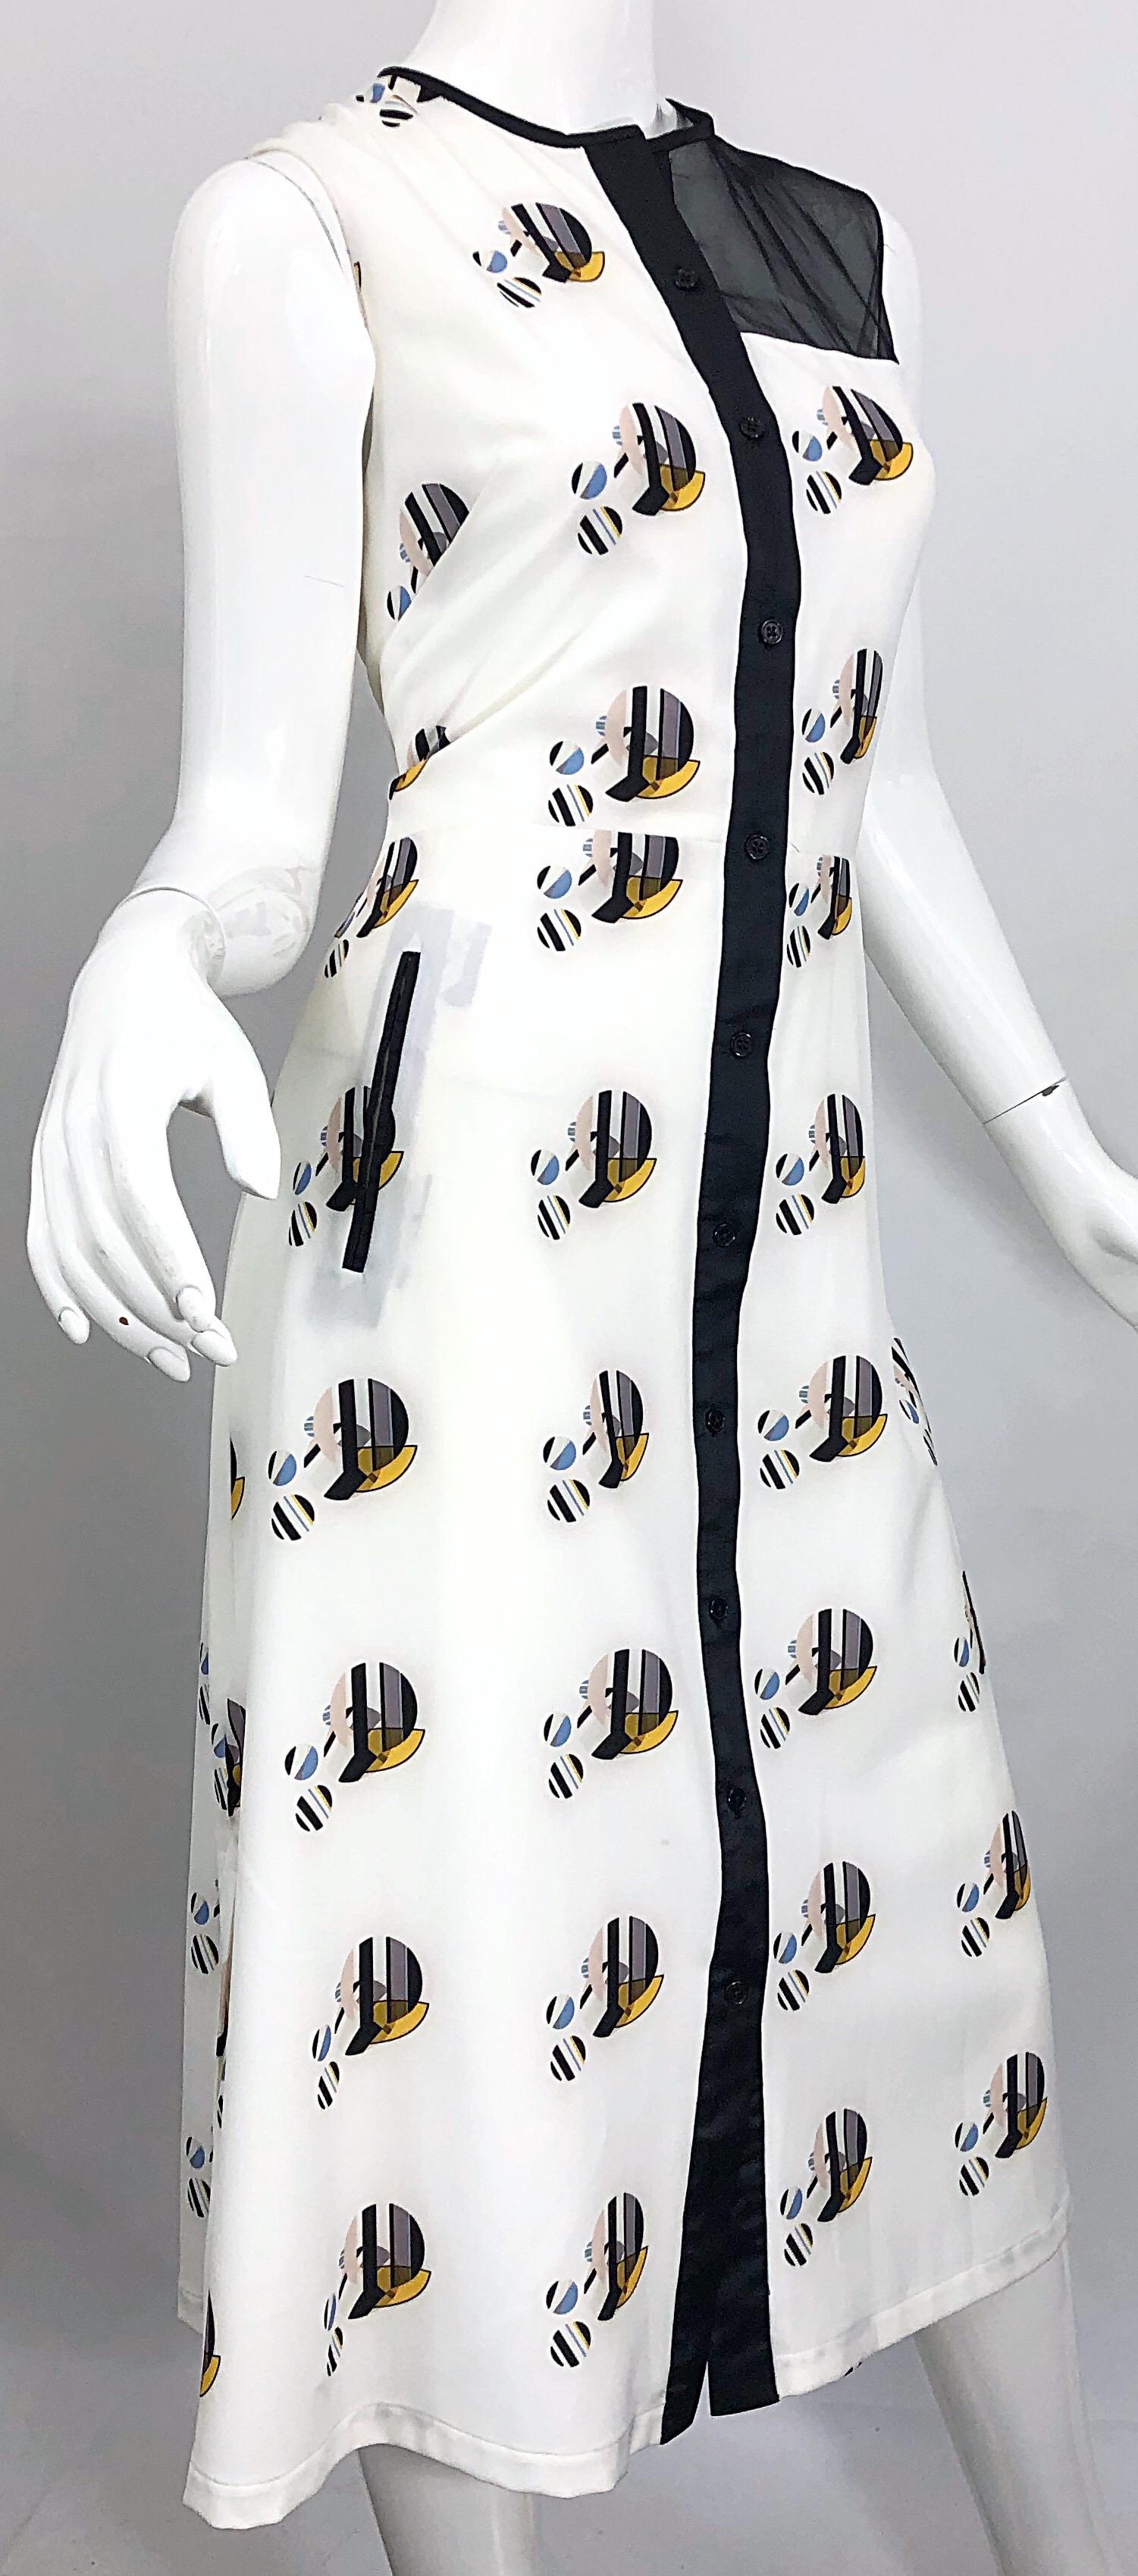 New Bibhu Mohapatra Abstract Print White and Black Silk Sleeveless Shirt Dress 1